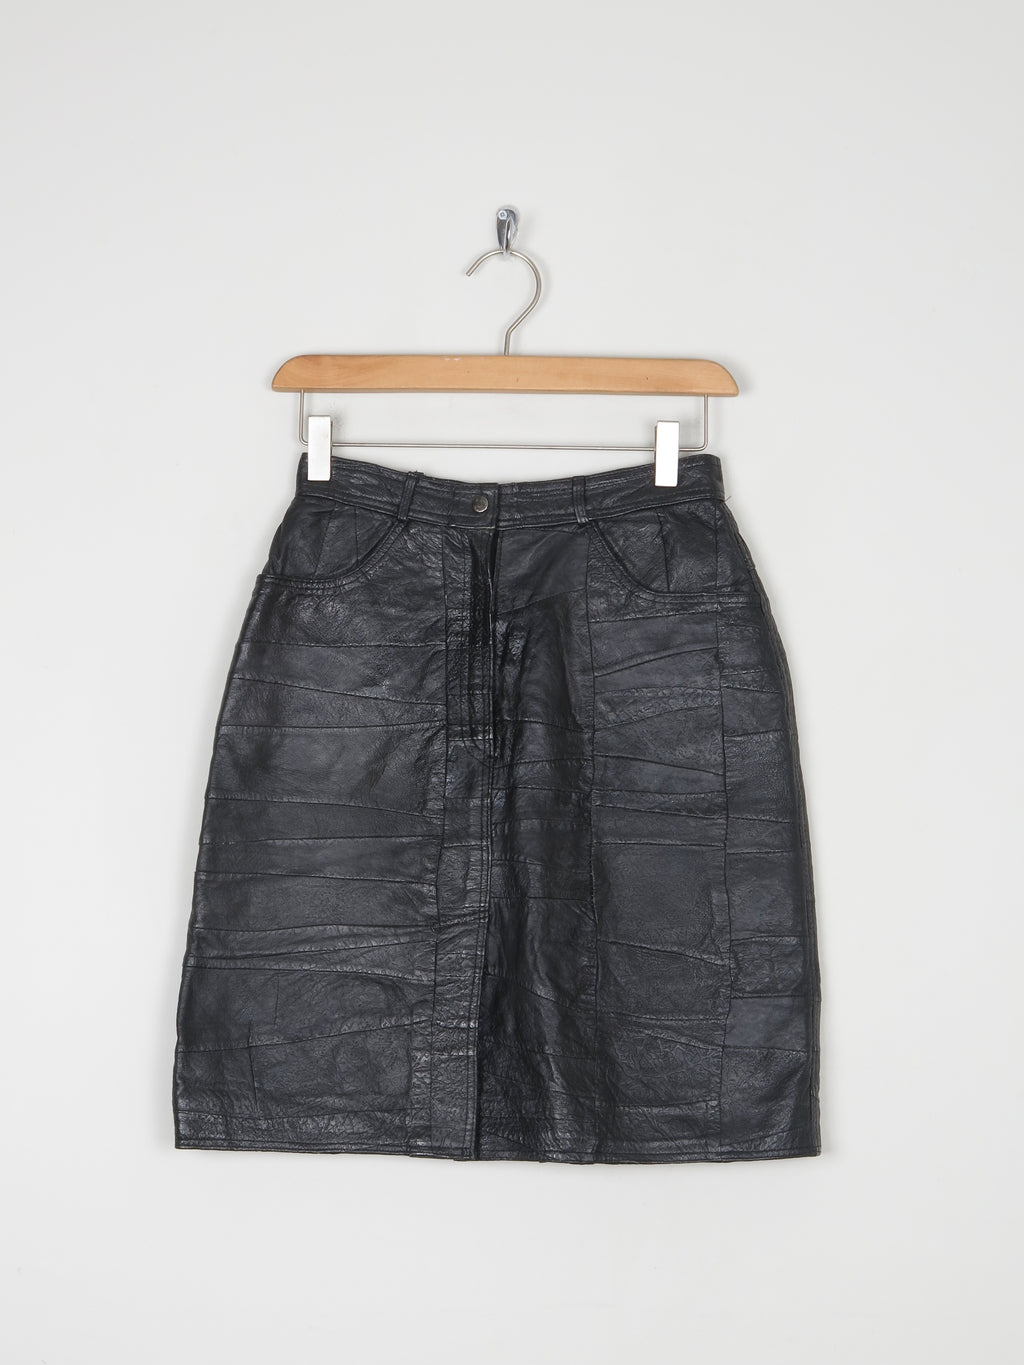 Vintage Black Leather Patchwork Mini Skirt 26" 6 - The Harlequin